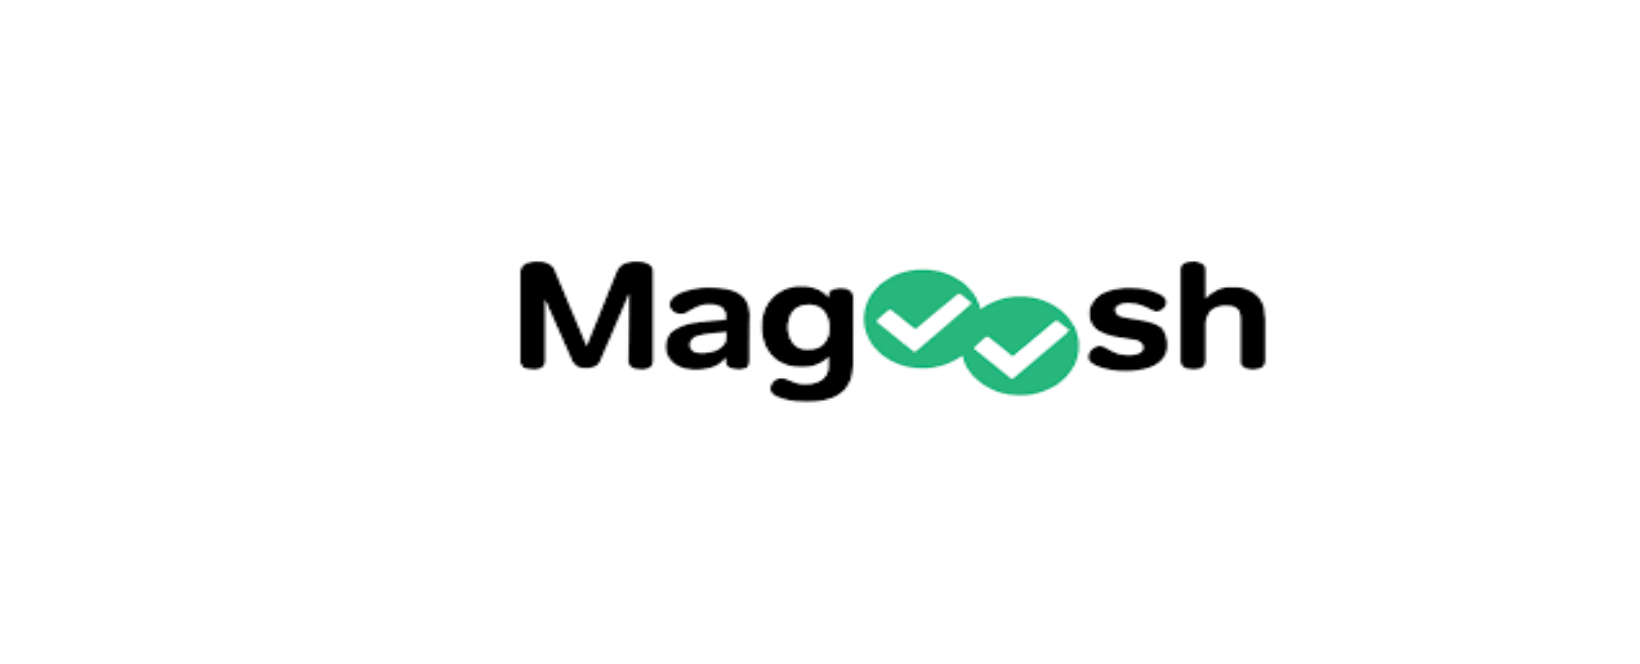 Magoosh Discount Code 2022